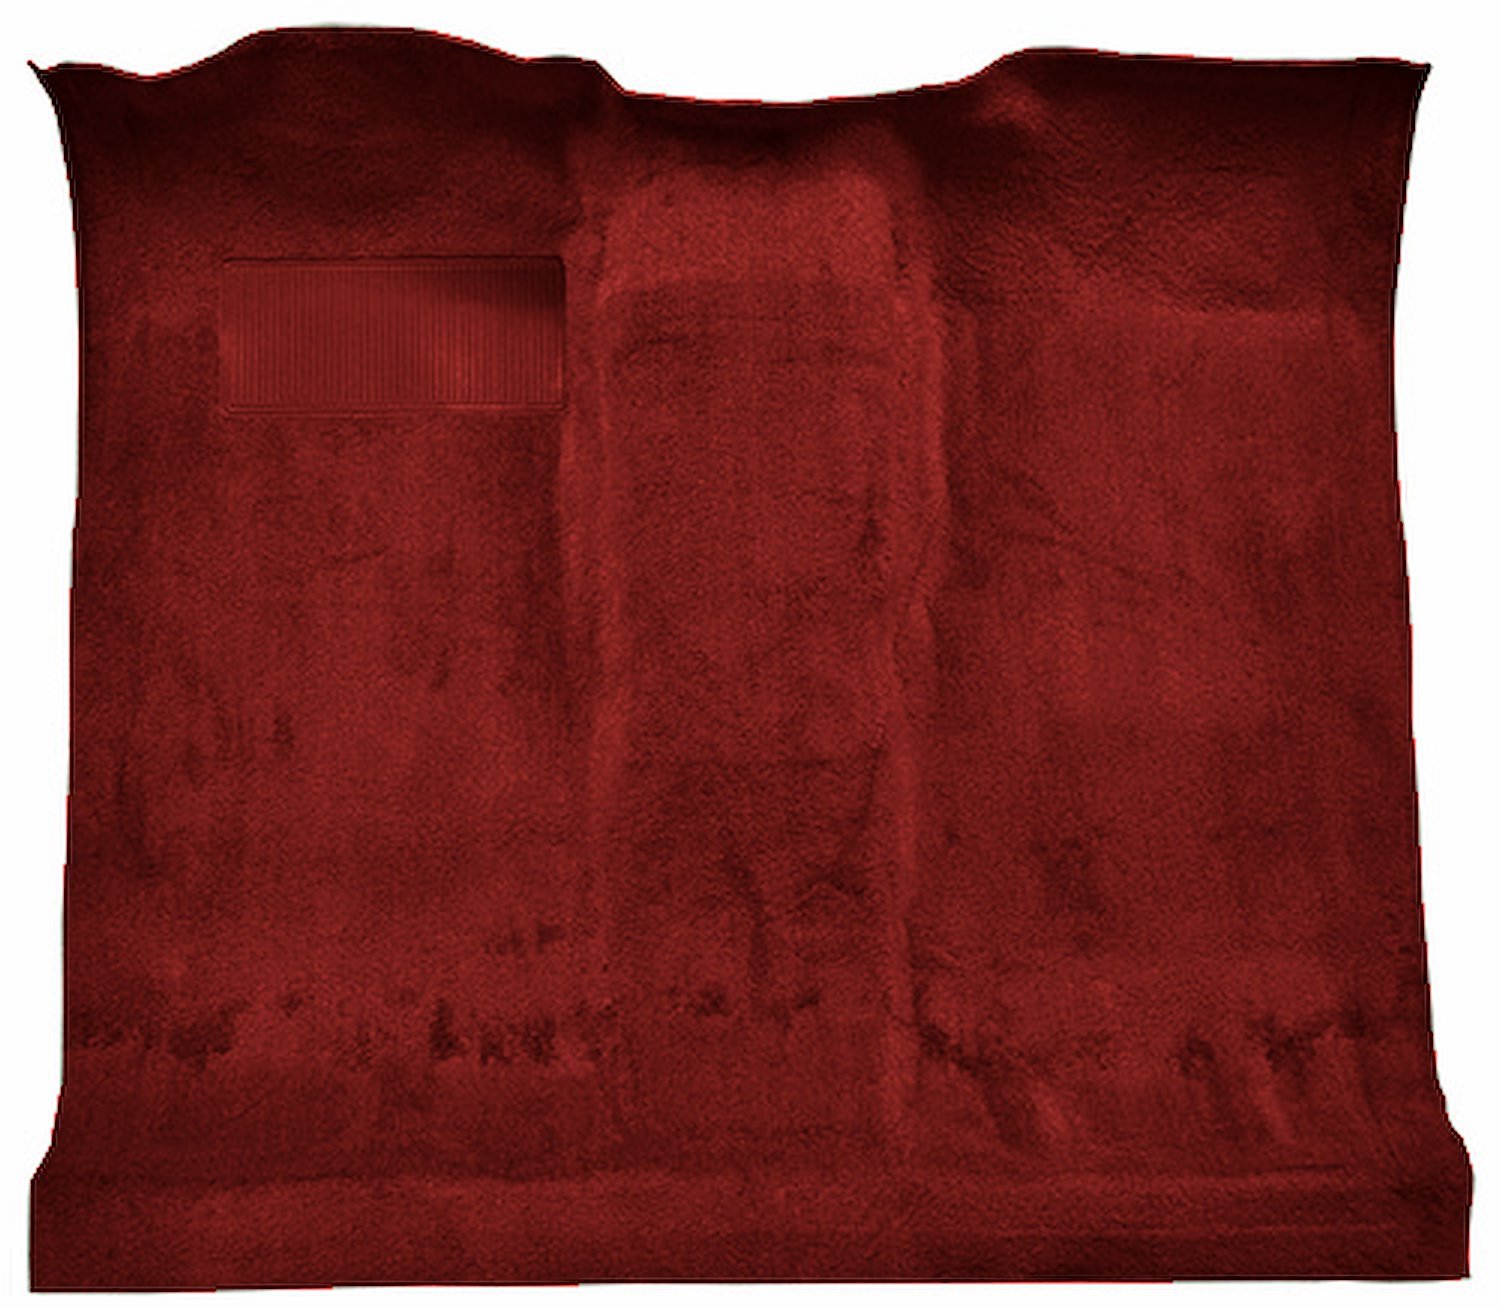 Molded Cut Pile Passenger Area Carpet for 1974-1977 Chevy Blazer, GMC Jimmy [Mass Backing, 1-Piece, Oxblood]